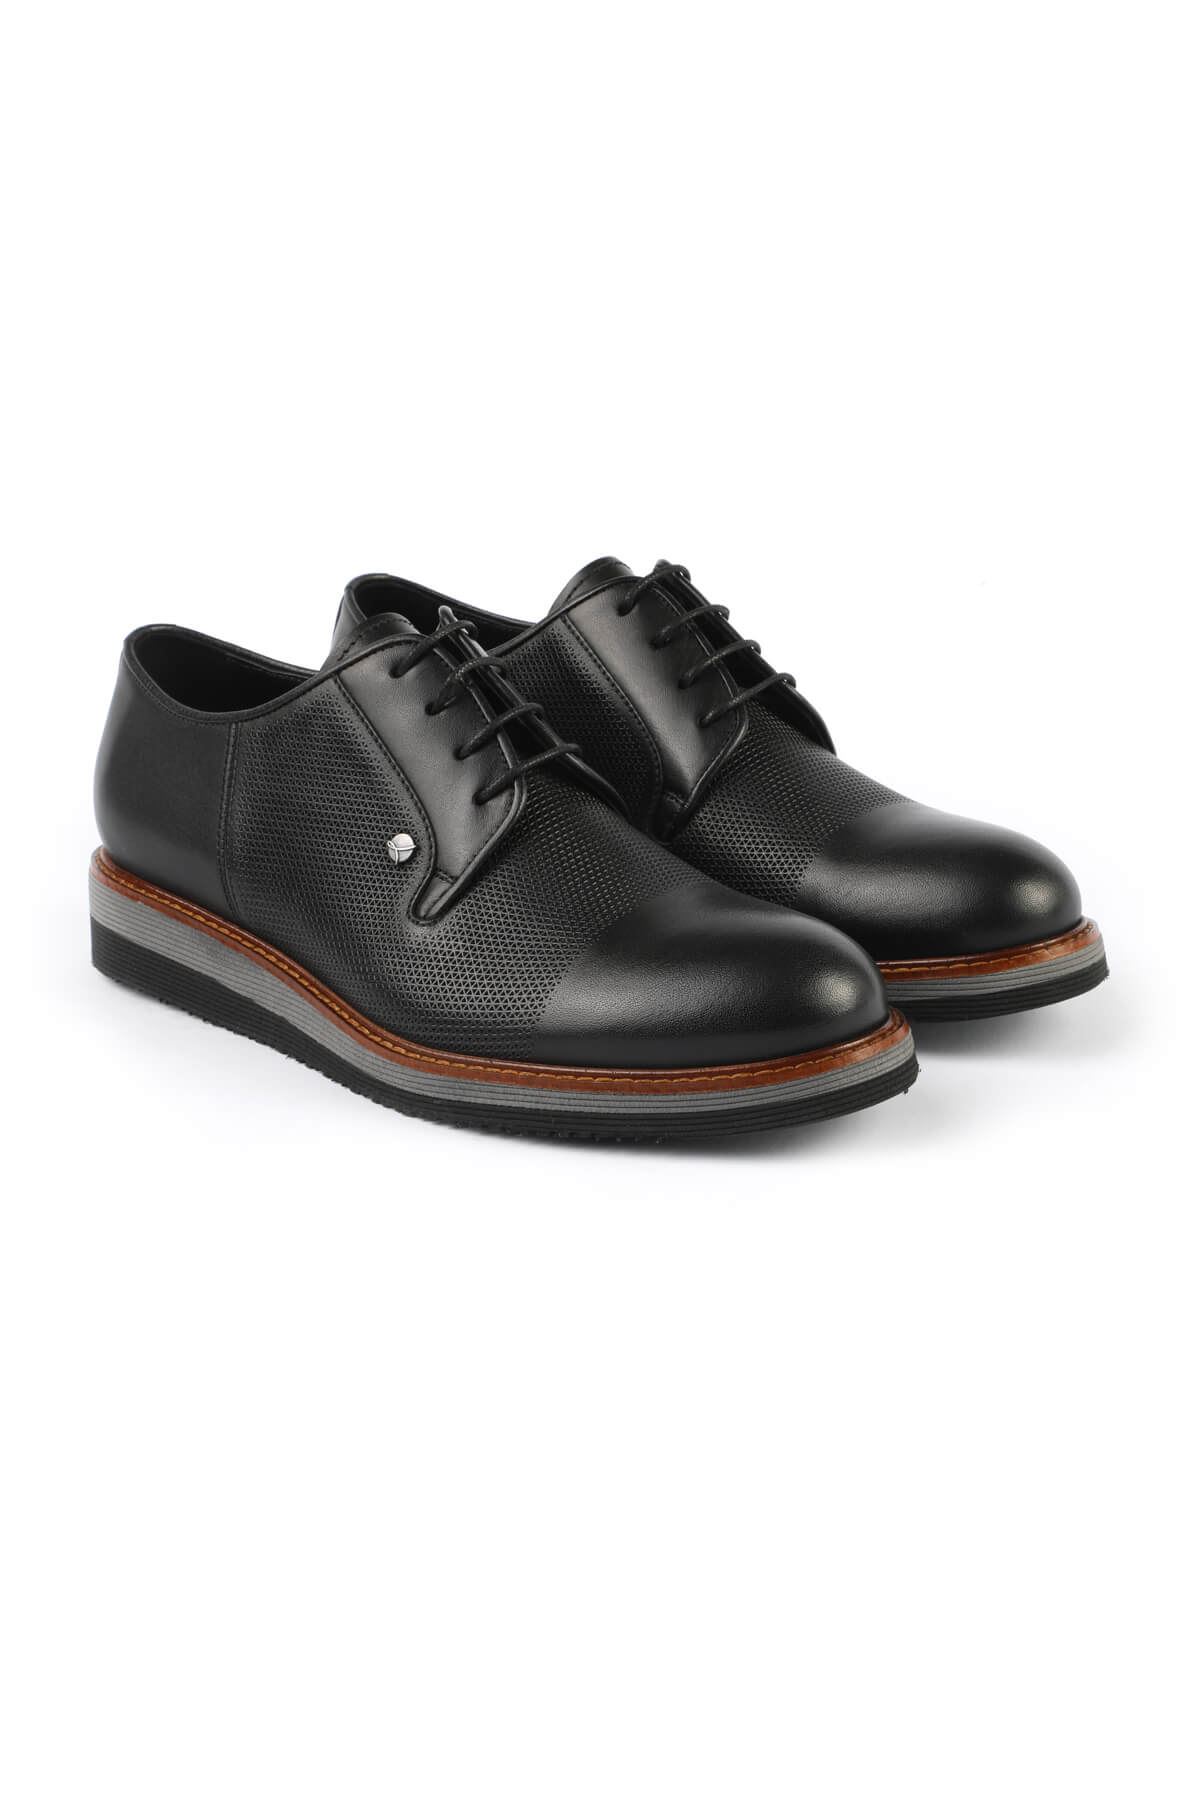 Libero 3052 Black Oxford Shoes